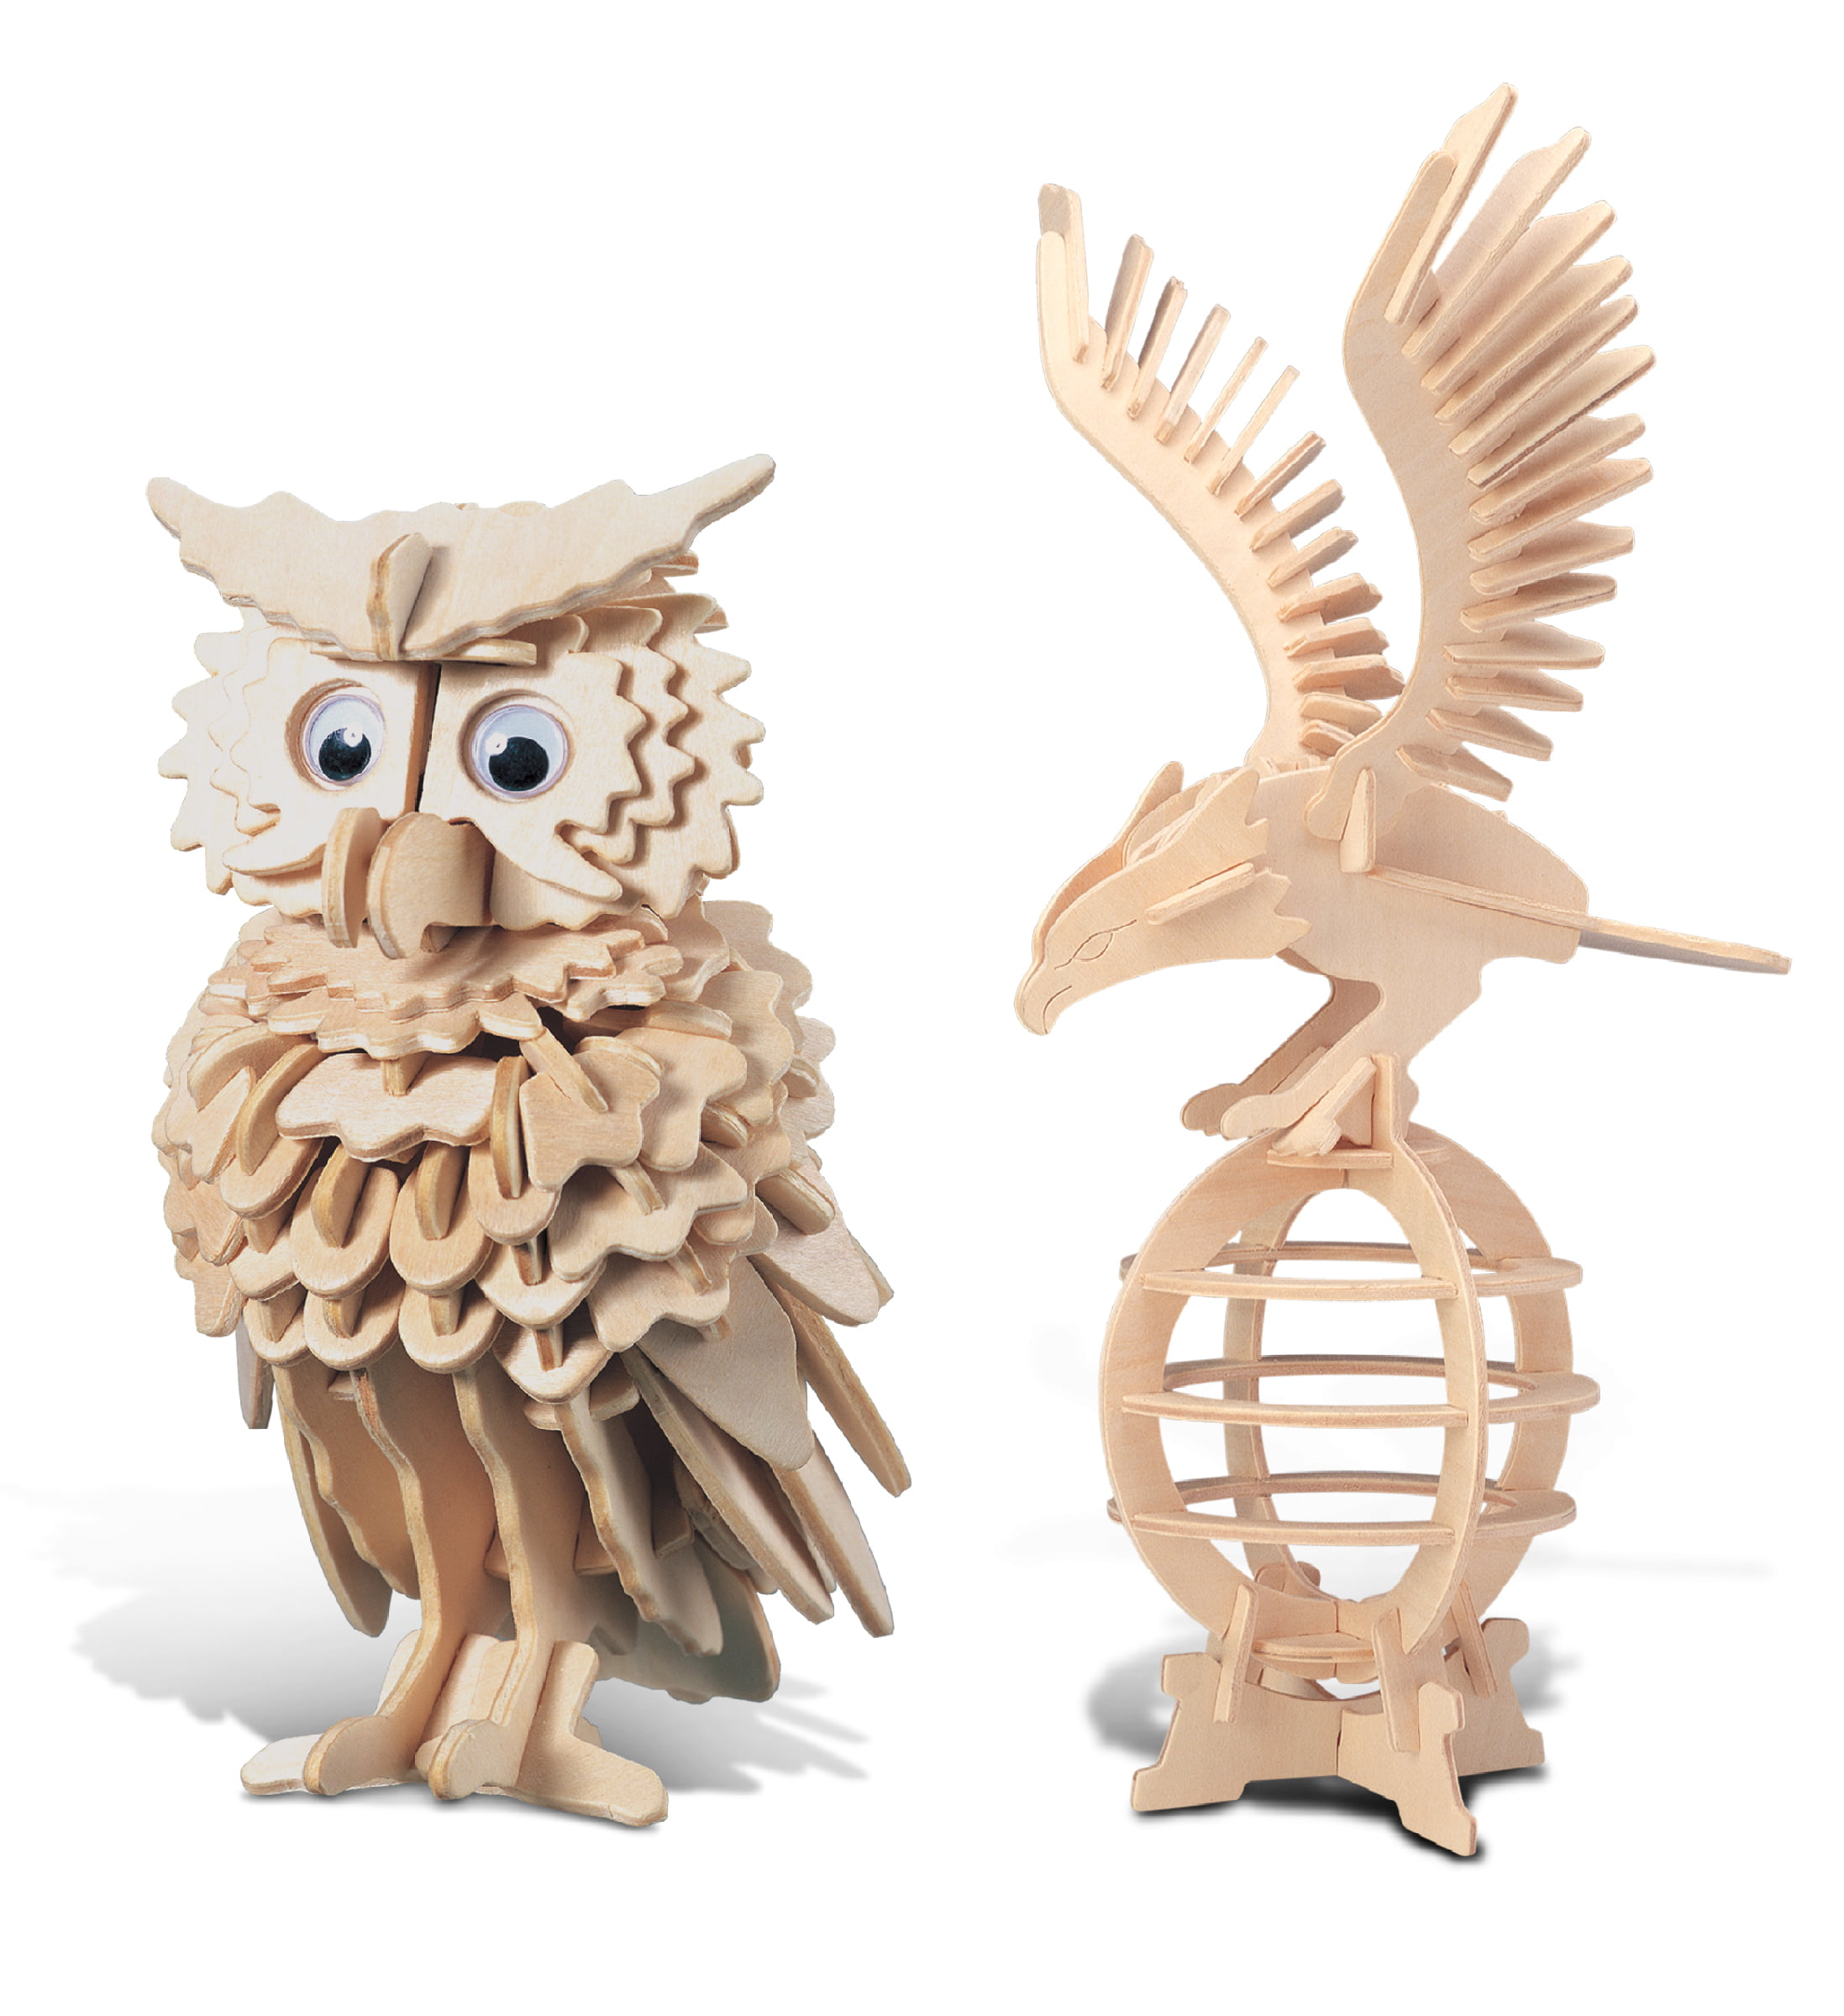 3D Wooden Owl DIY Puzzle Jigsaw Woodcraft Kids Educational Crafts Model O2B4 